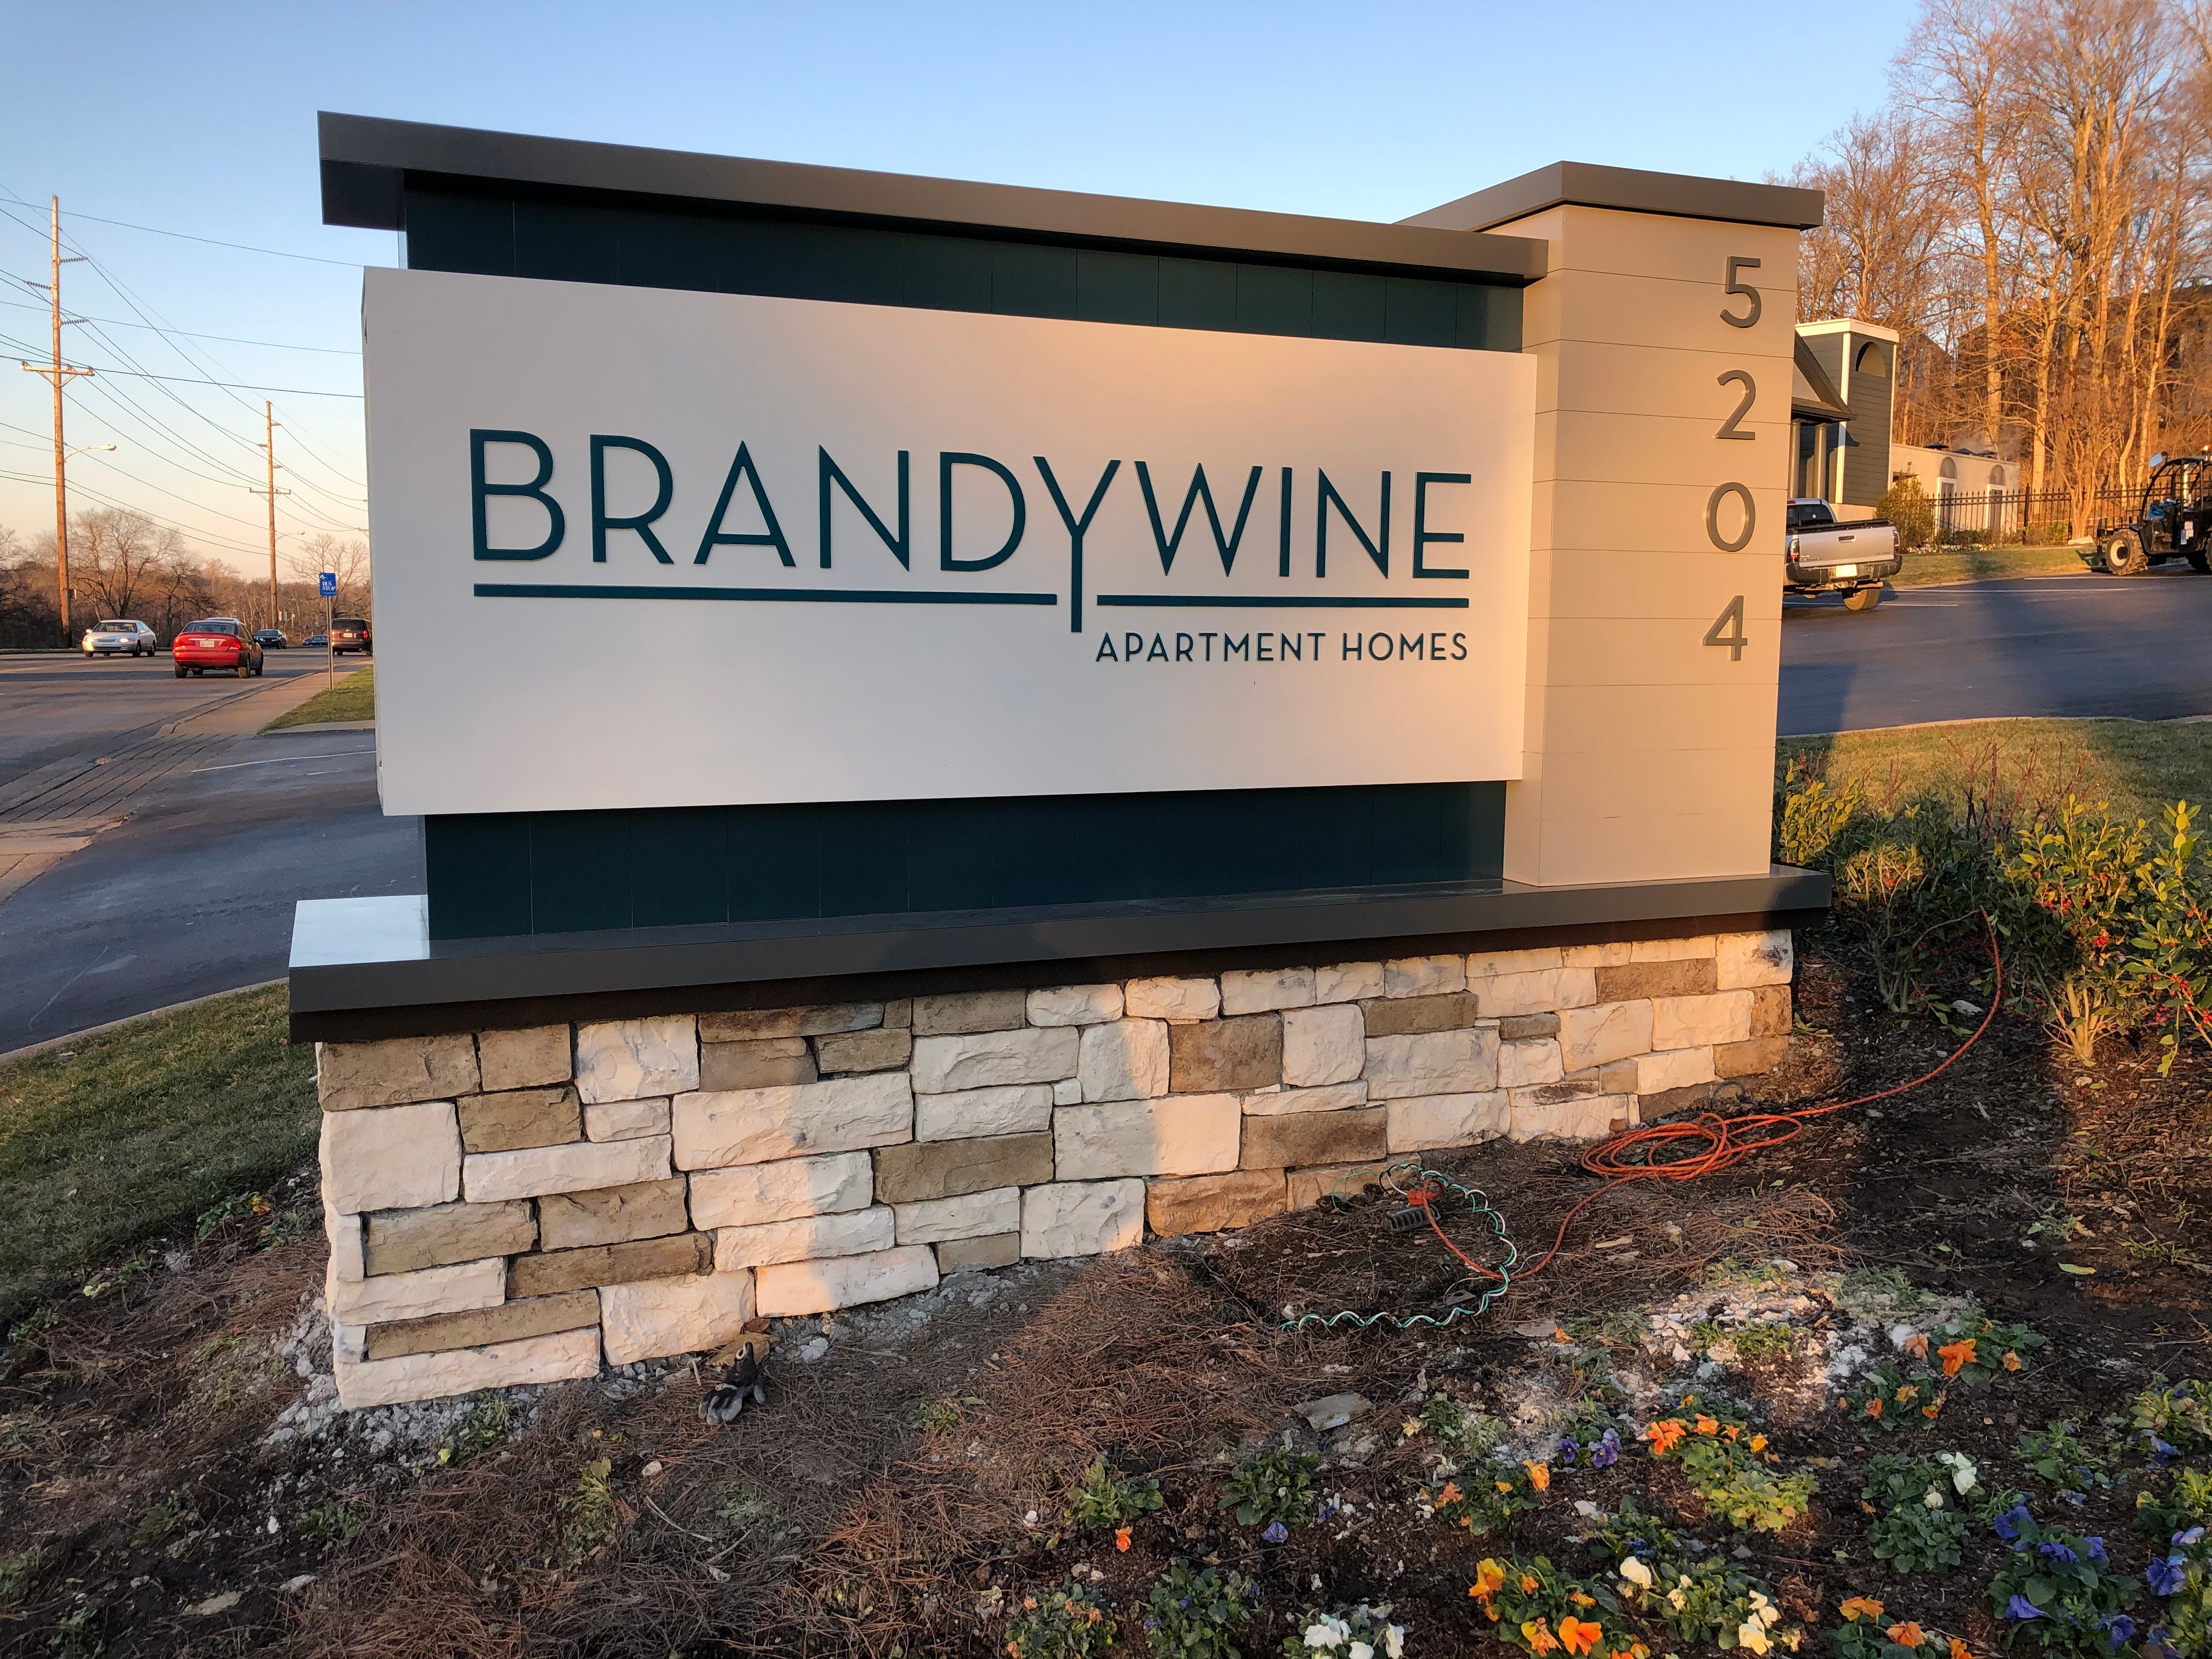 BH - Brandywine Rebrand, lighted monument sign, apartment community sign